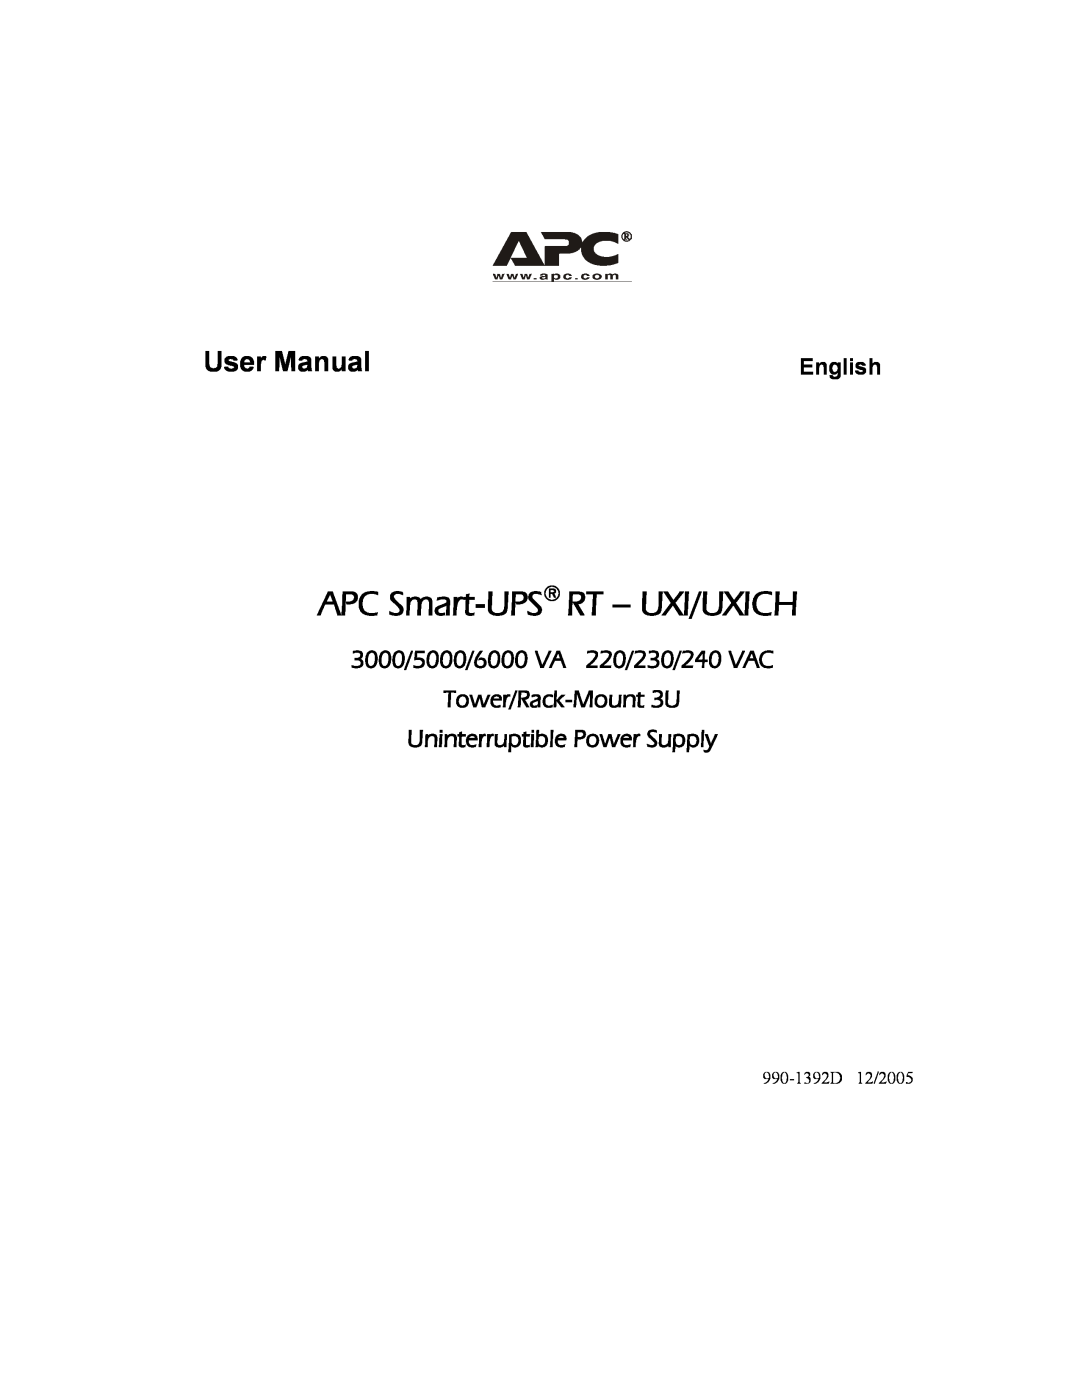 American Power Conversion RT-UXICH user manual 3000/5000/6000 VA 220/230/240 VAC Tower/Rack-Mount 3U, User Manual, English 